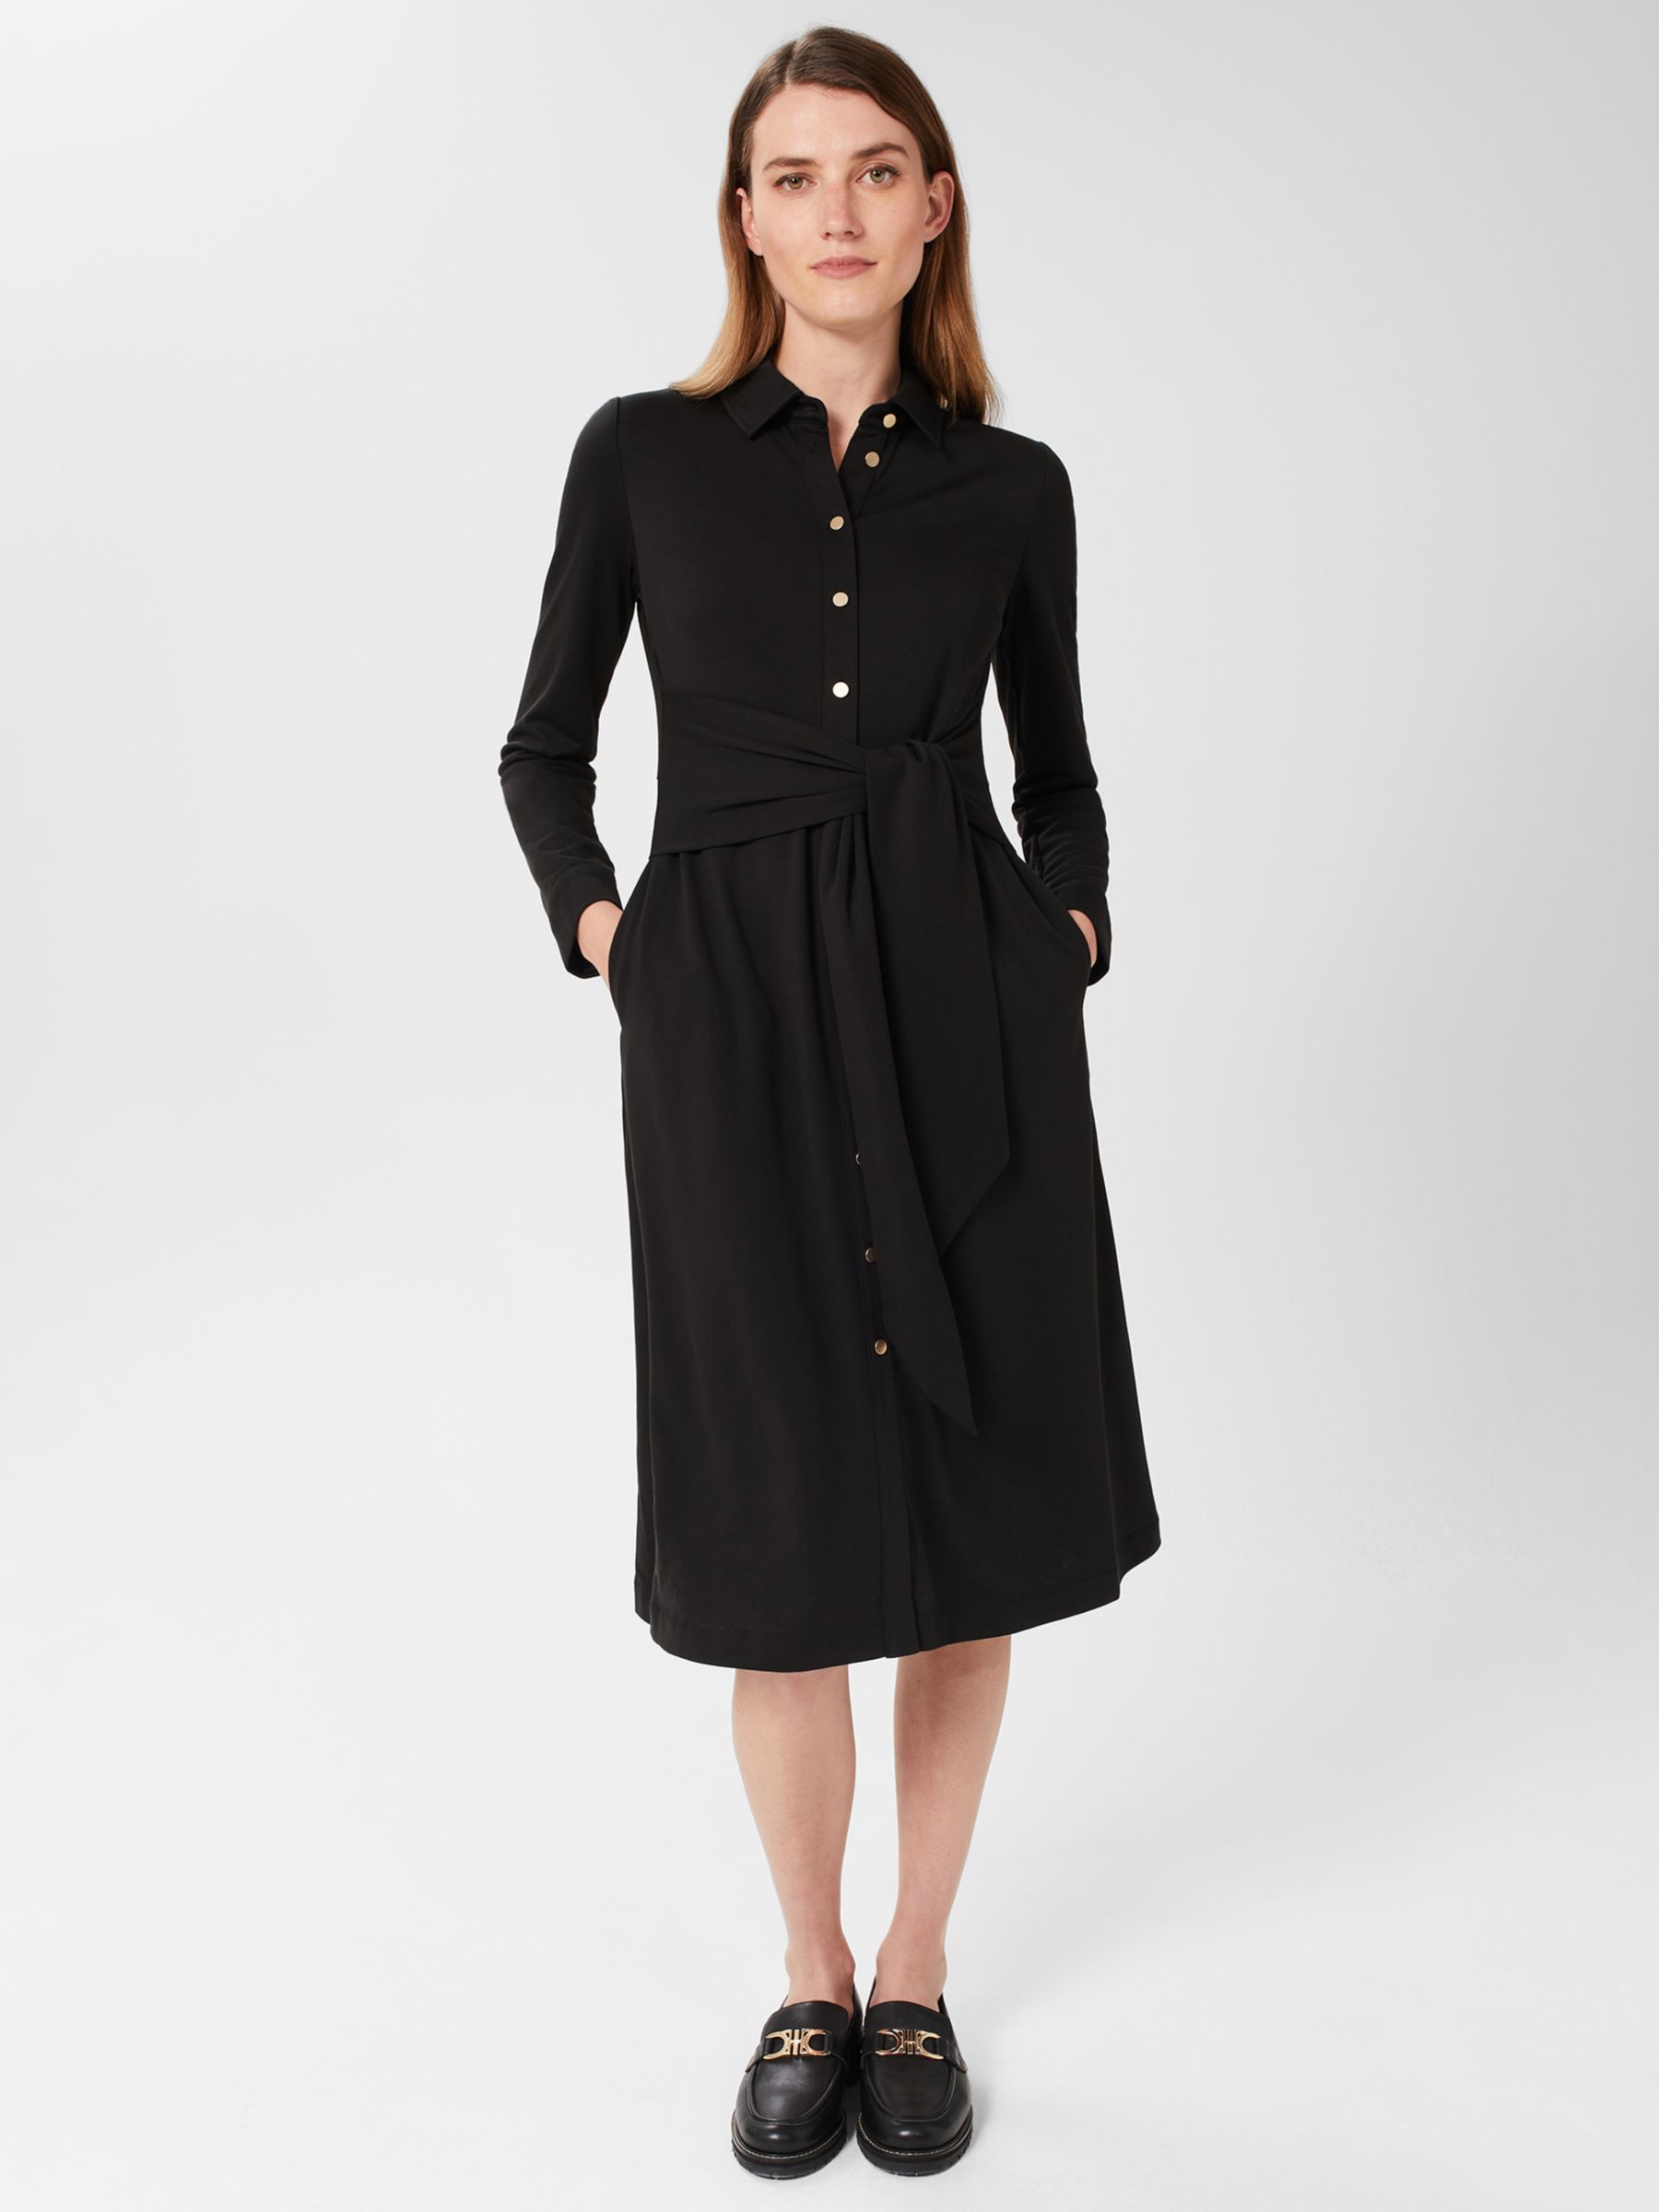 Hobbs Karina Shirt Dress, Black at John Lewis & Partners